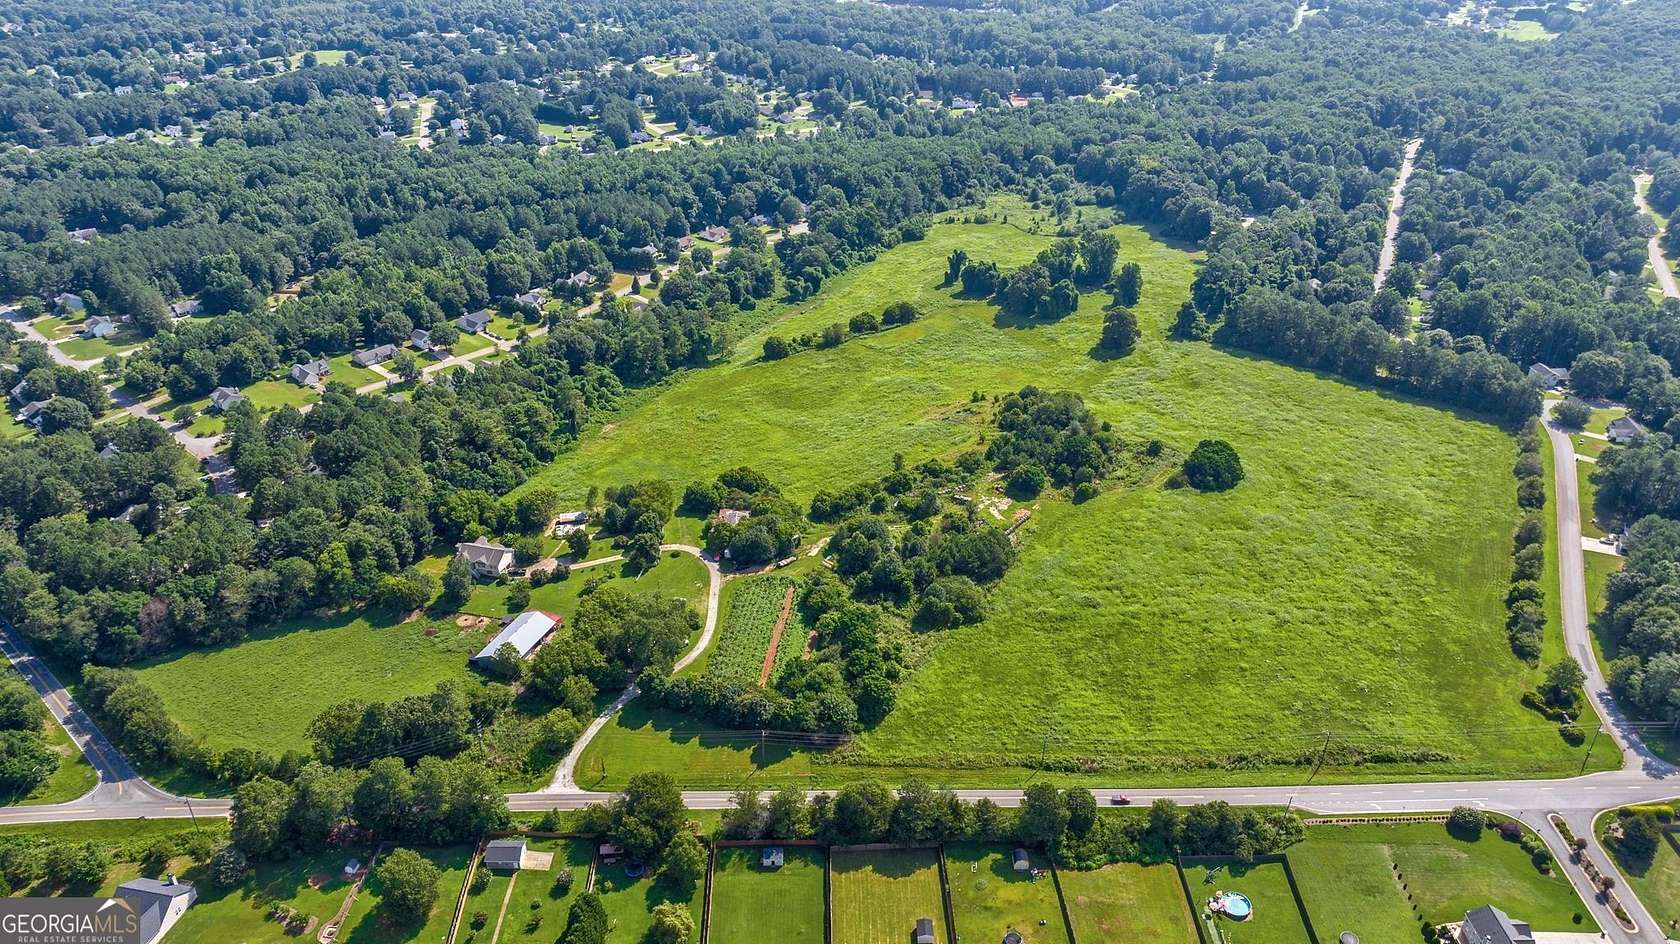 42 Acres of Agricultural Land for Sale in Bethlehem, Georgia